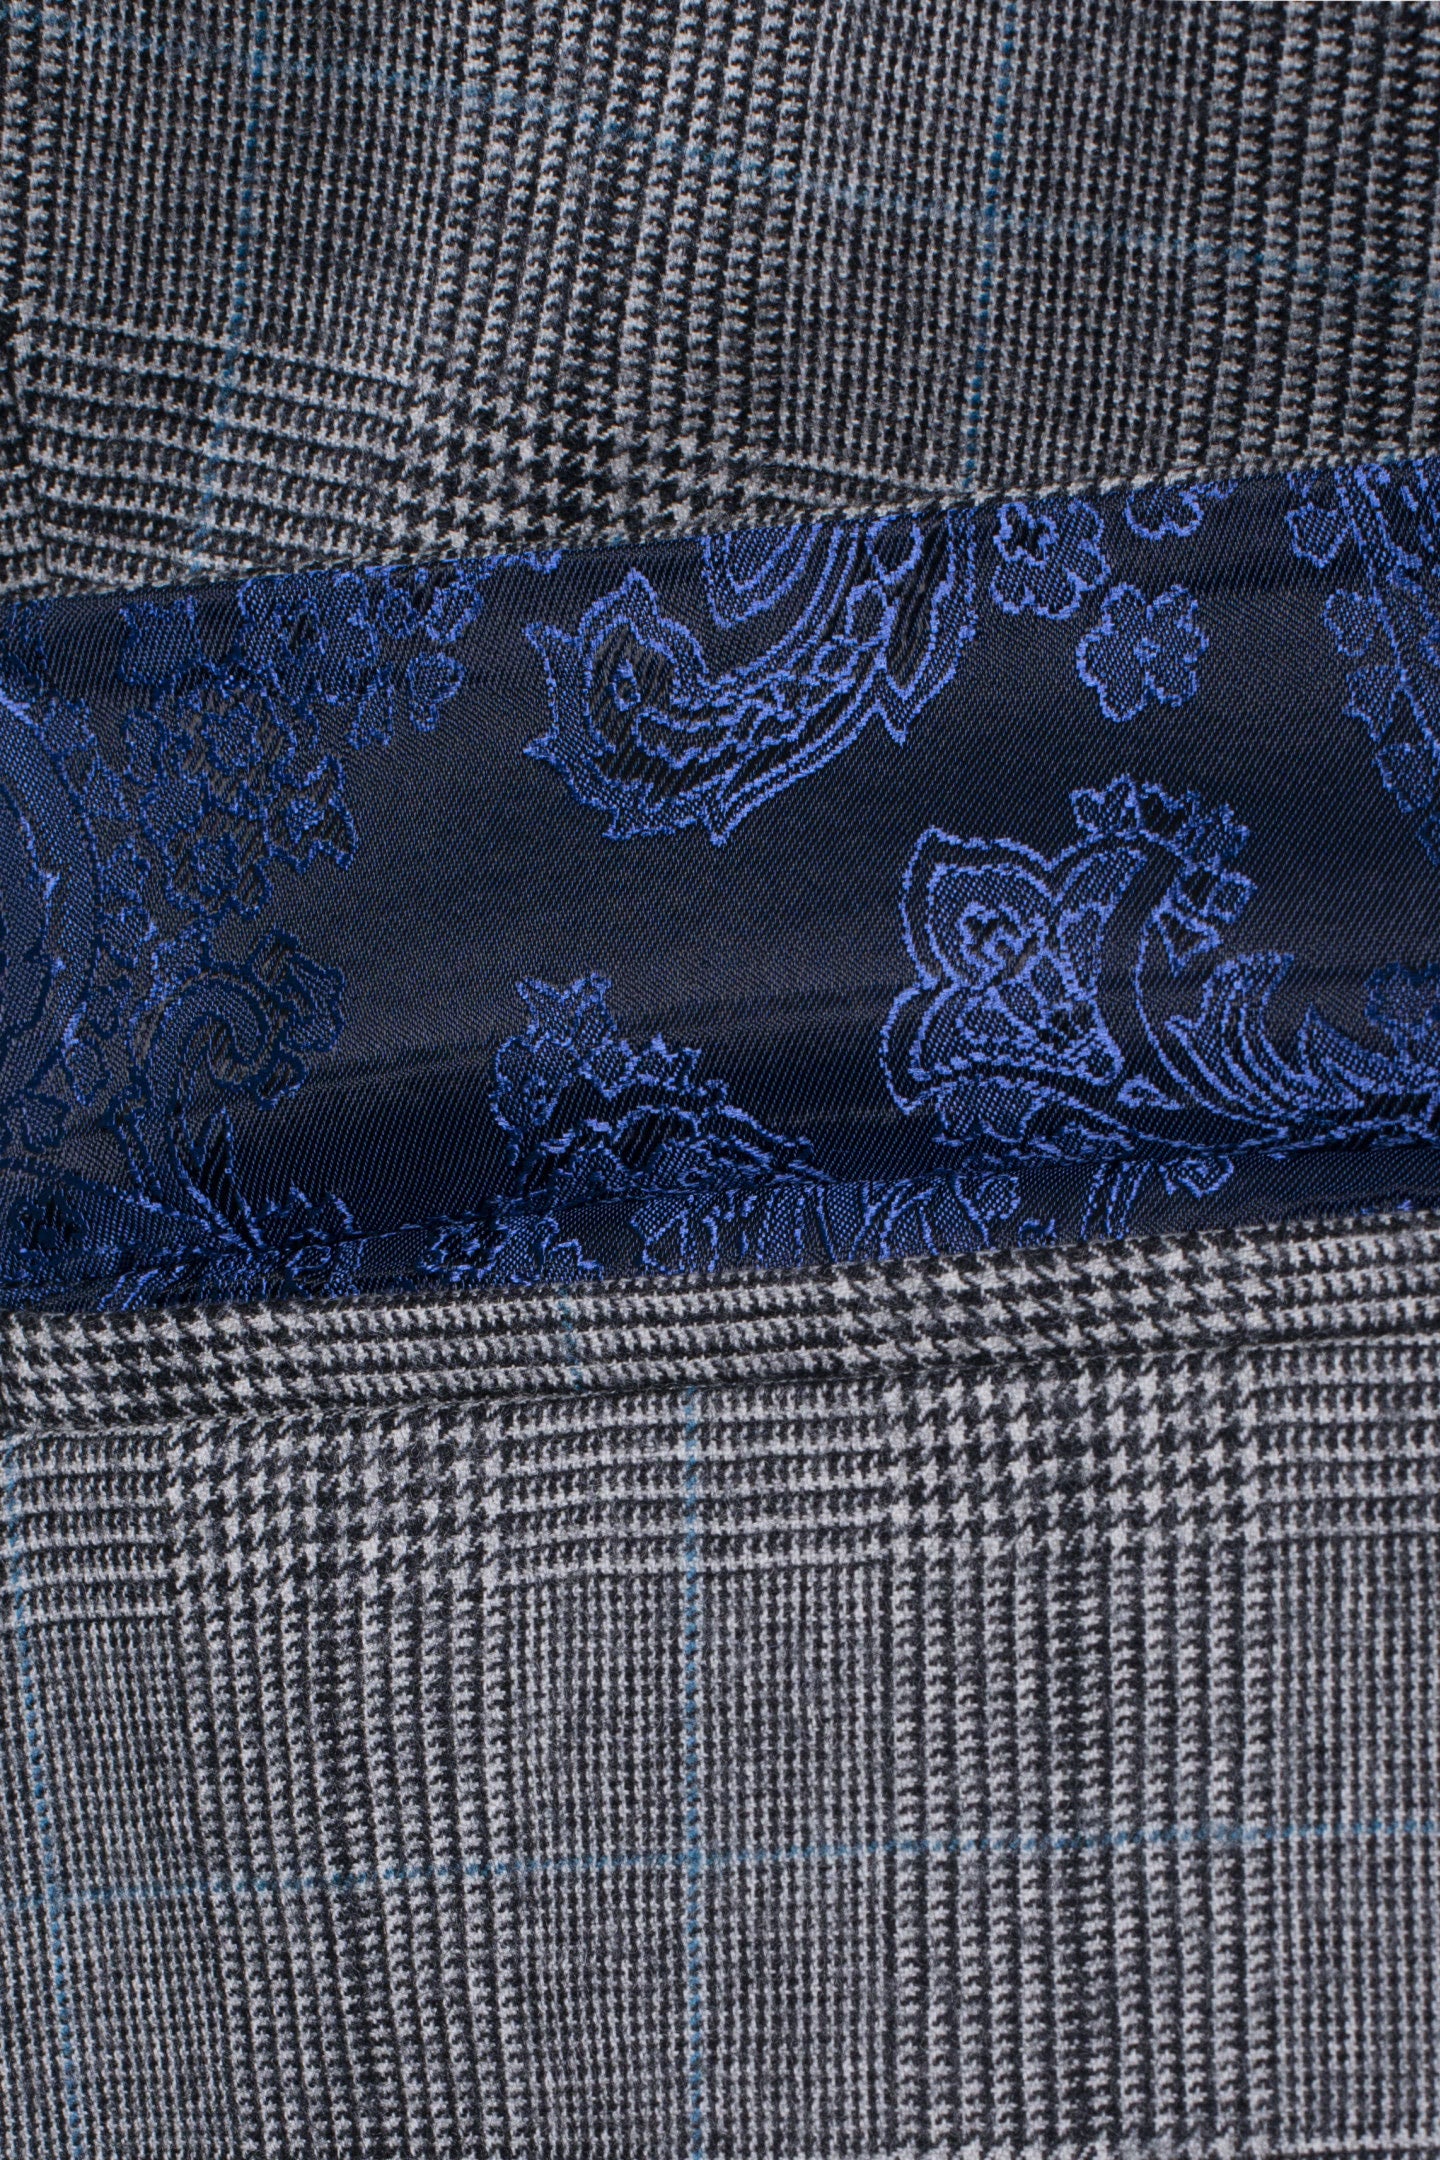 La Joe - Oversized Blazer Jacket Gray Wool White Chalk Stripes Blue Cashmere Print Lining